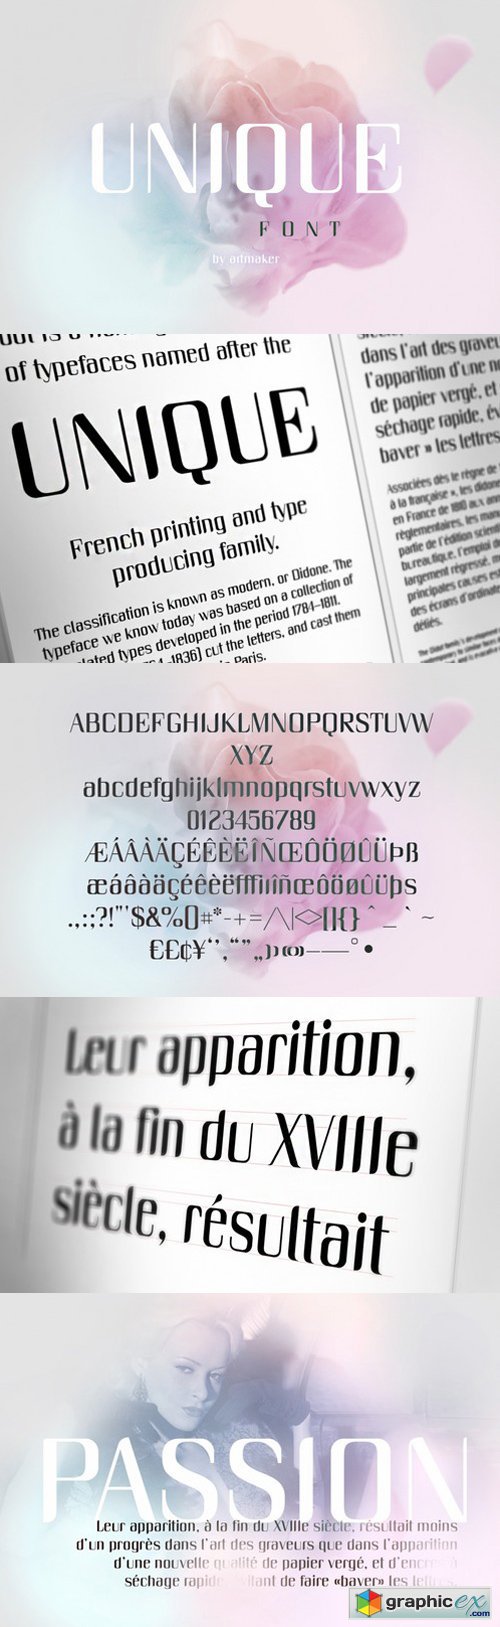 Unique Typeface